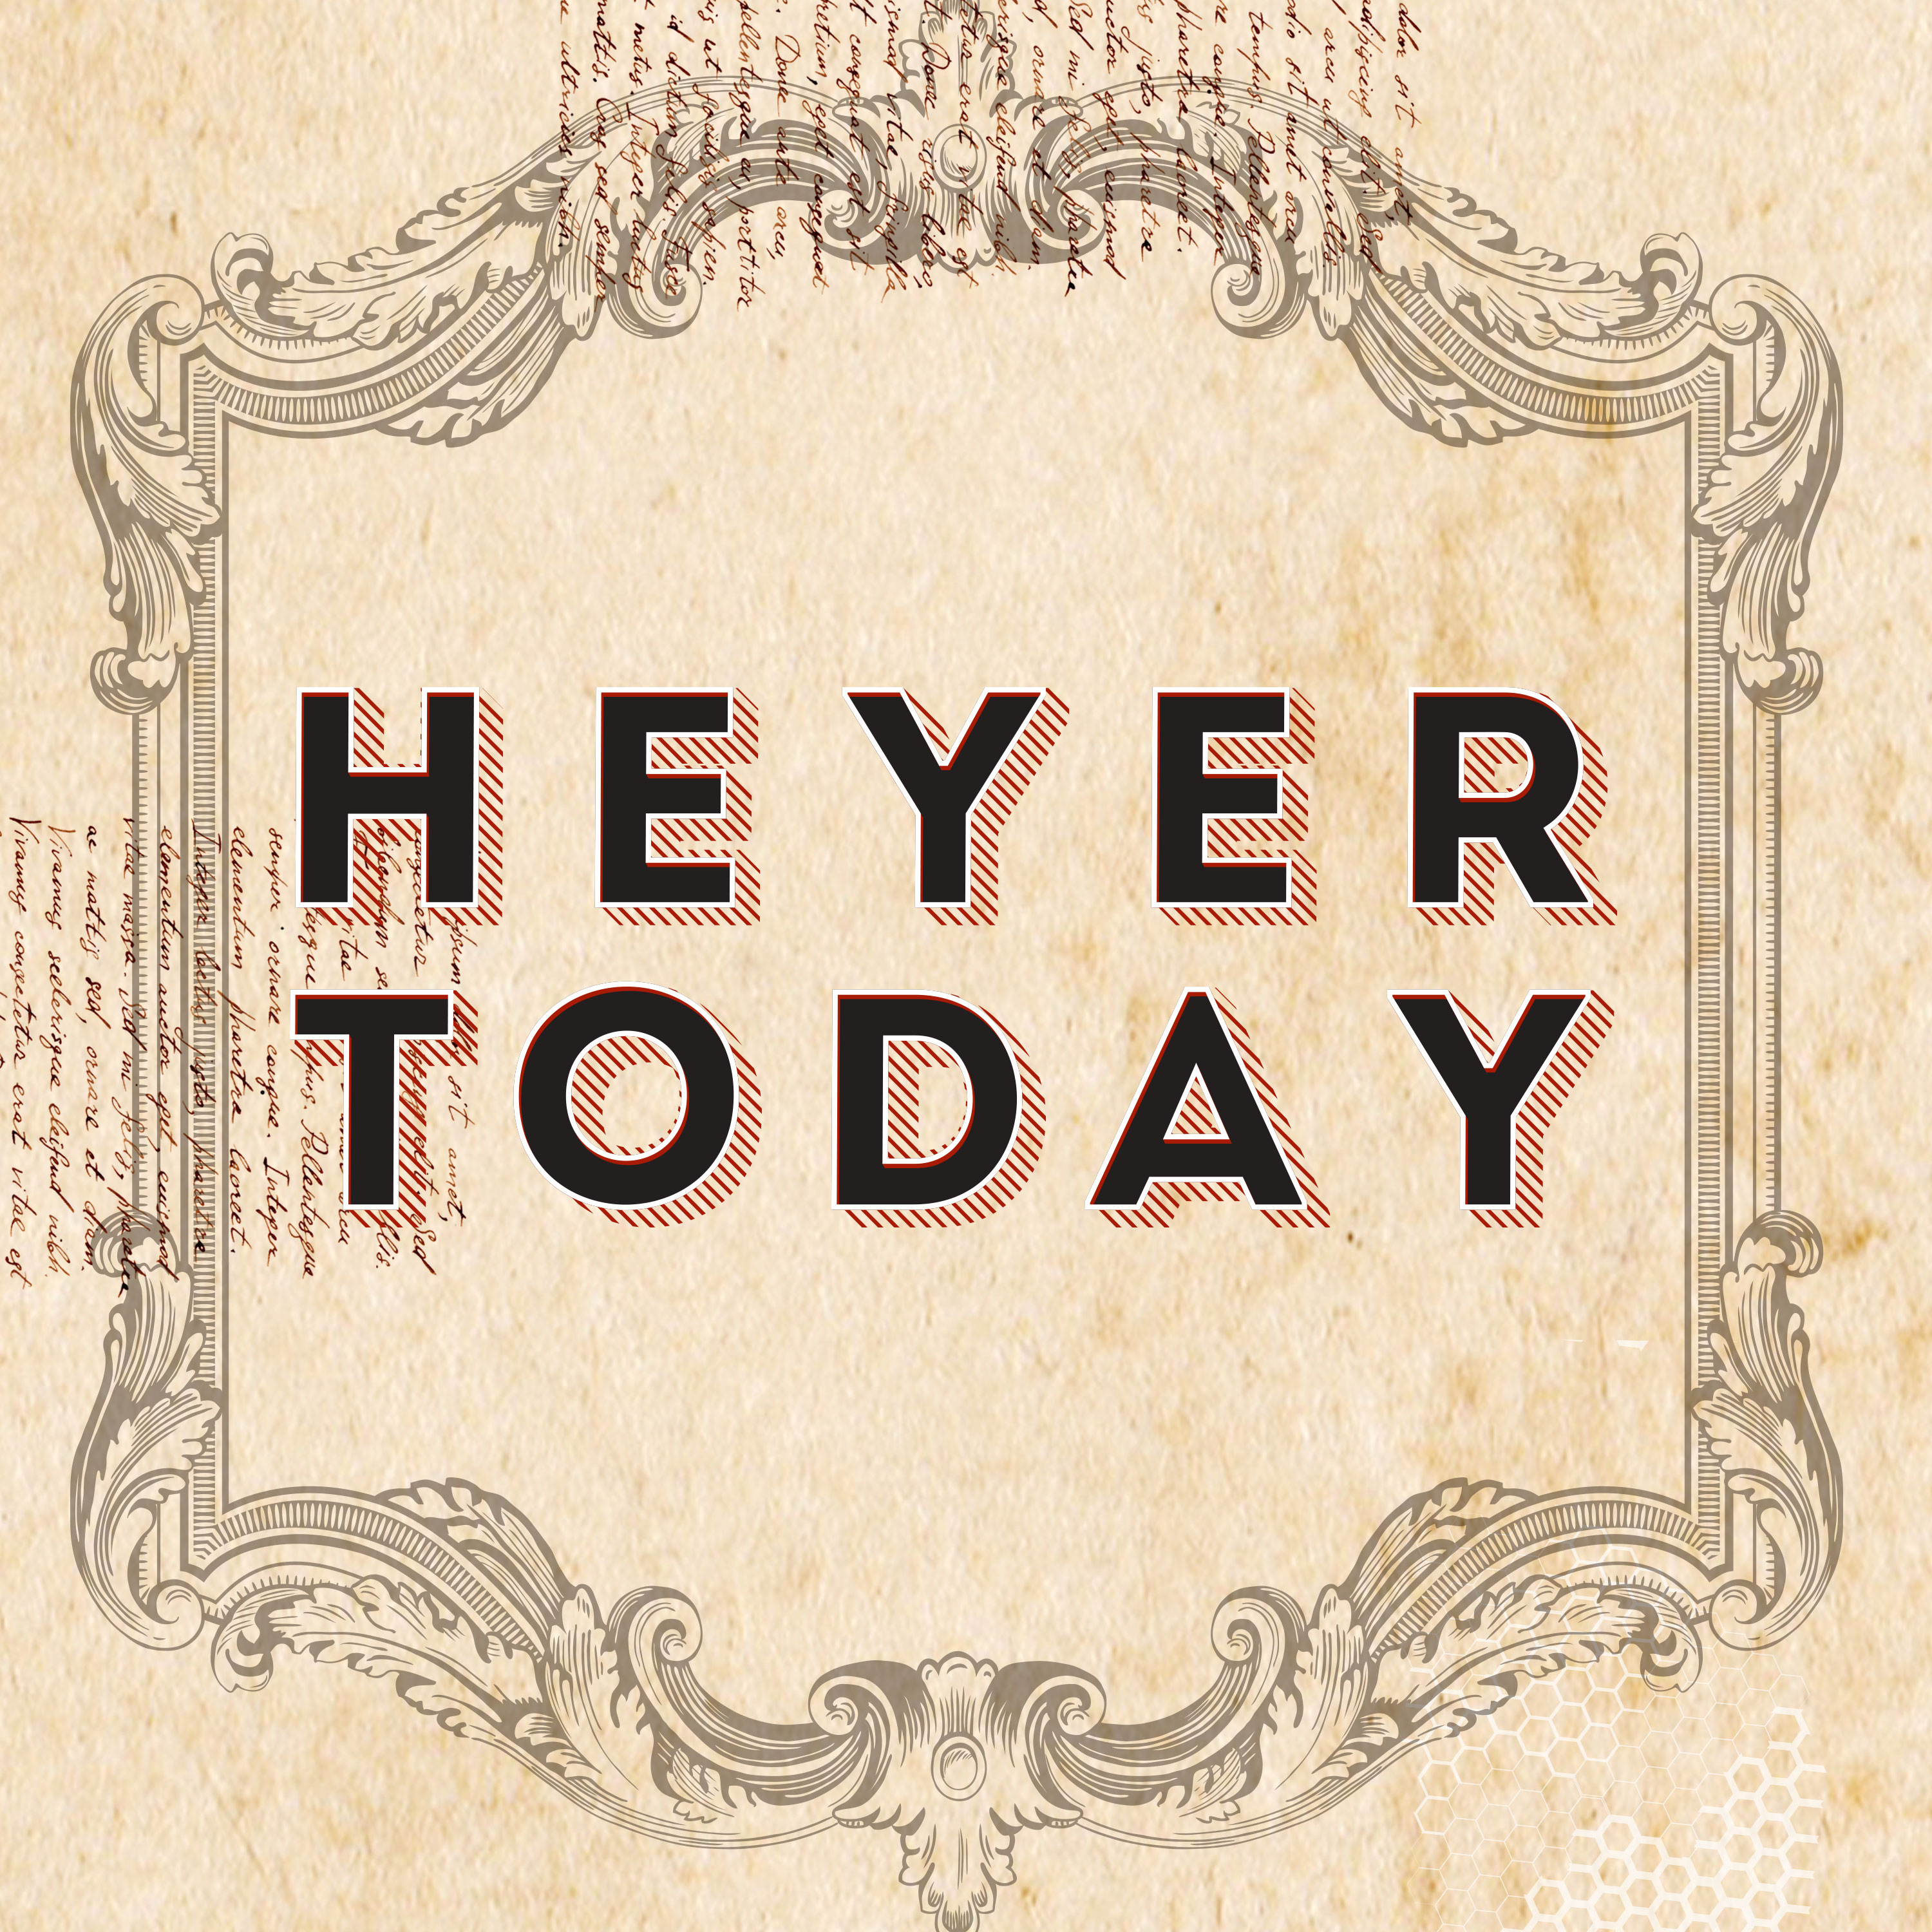 Illustration-3000x3000-HEYER-TODAY